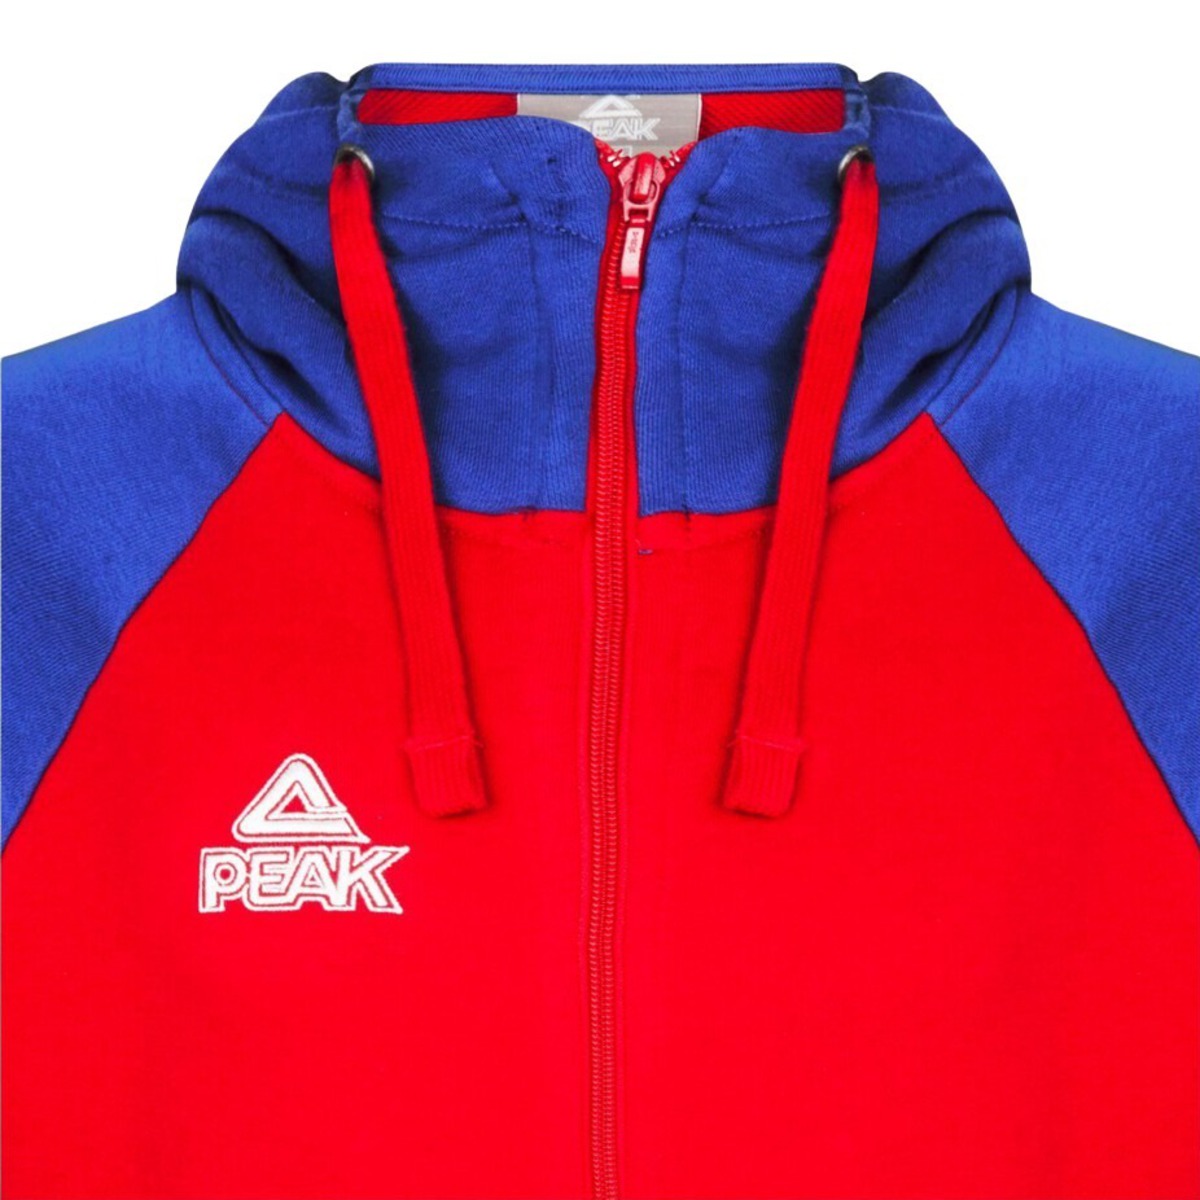 Chaqueta Peak Zip Bi-color Élite - Azul/Rojo  MKP